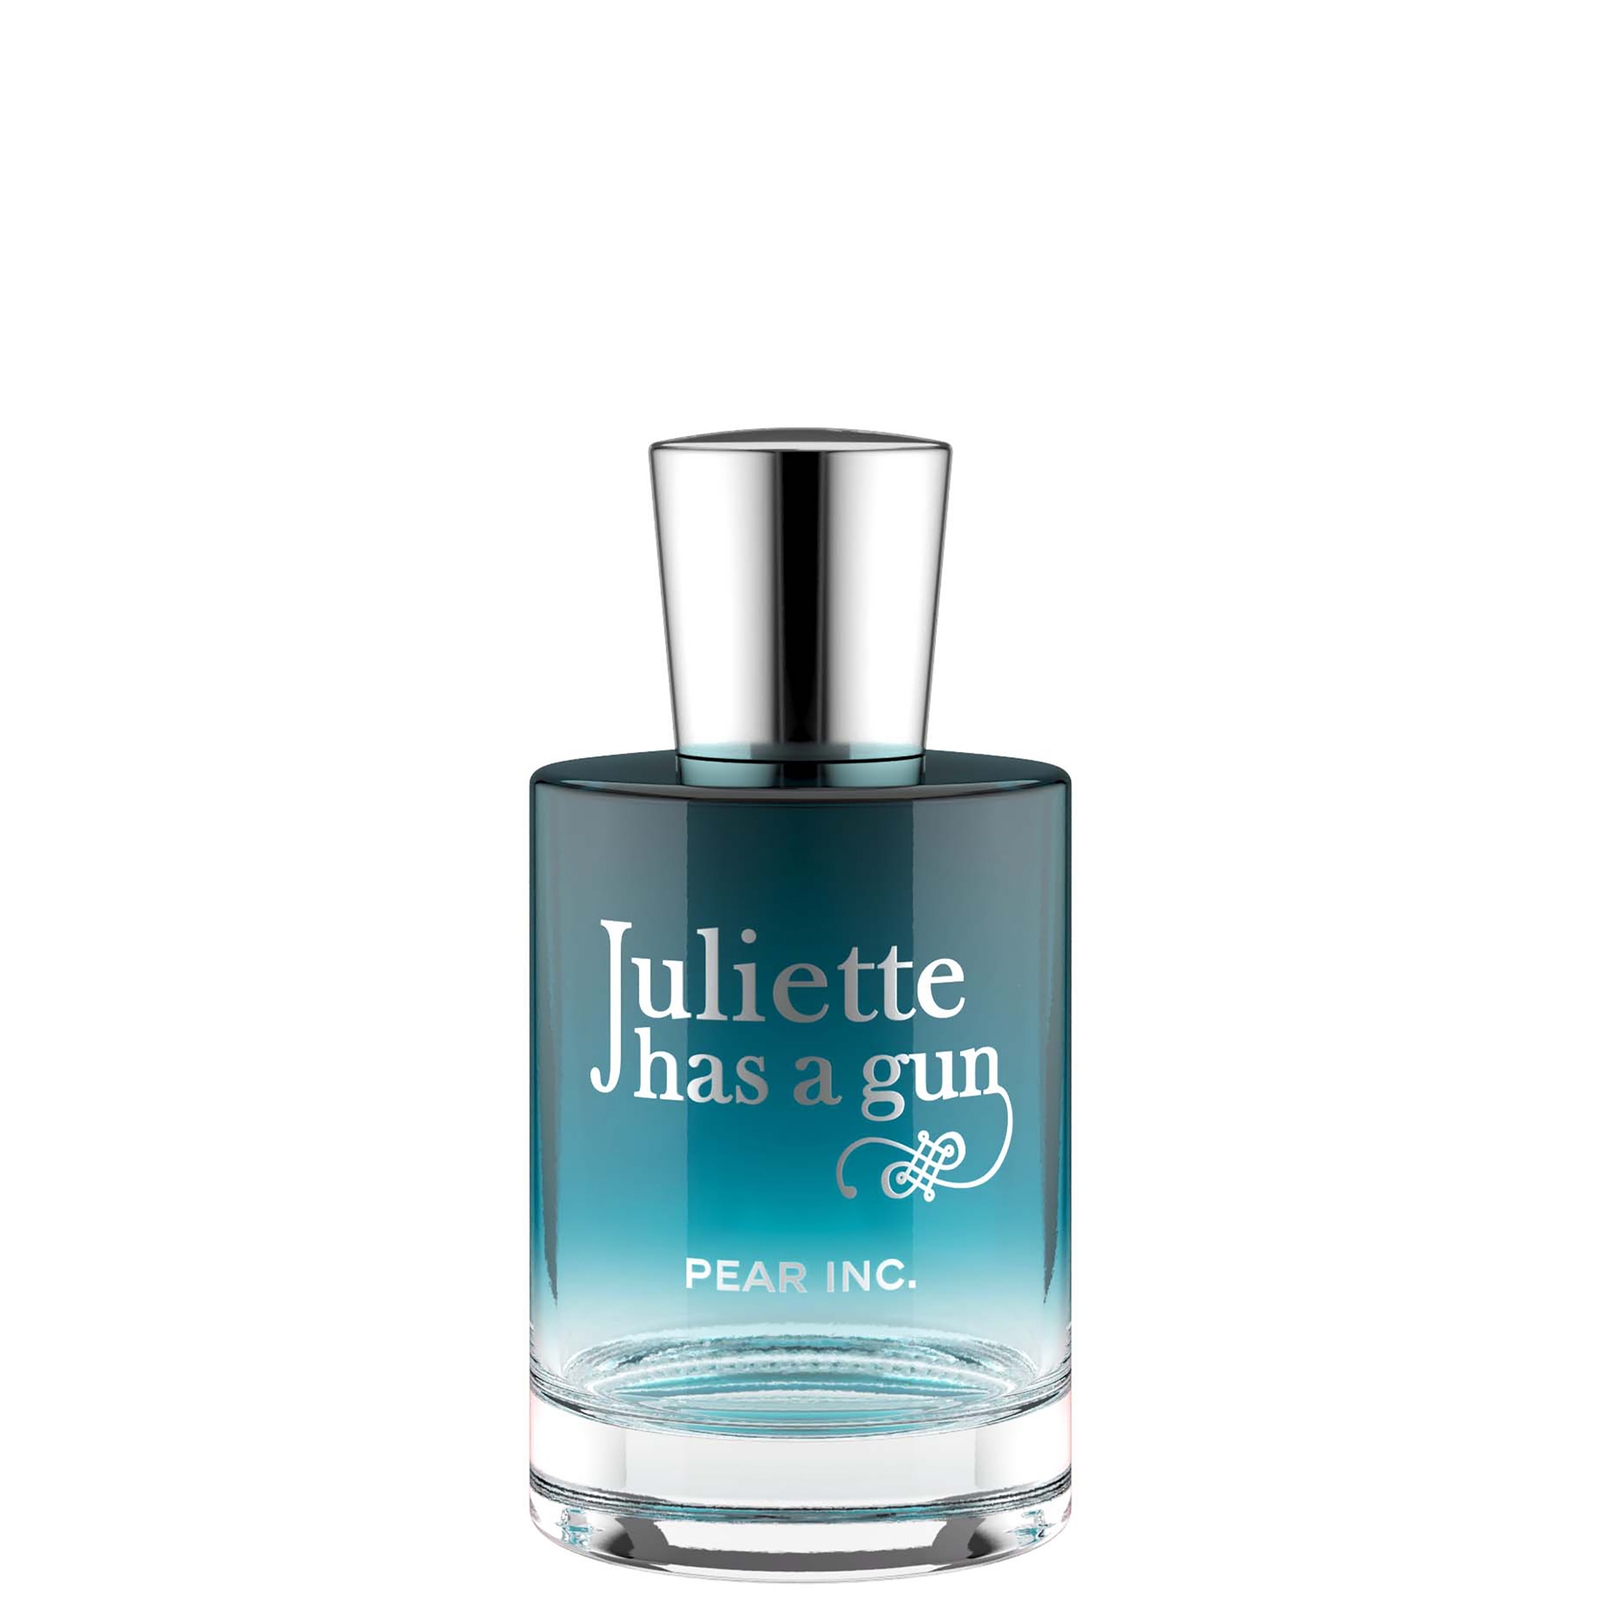 Juliette Has a Gun Pear Inc. Eau de Parfum 50ml